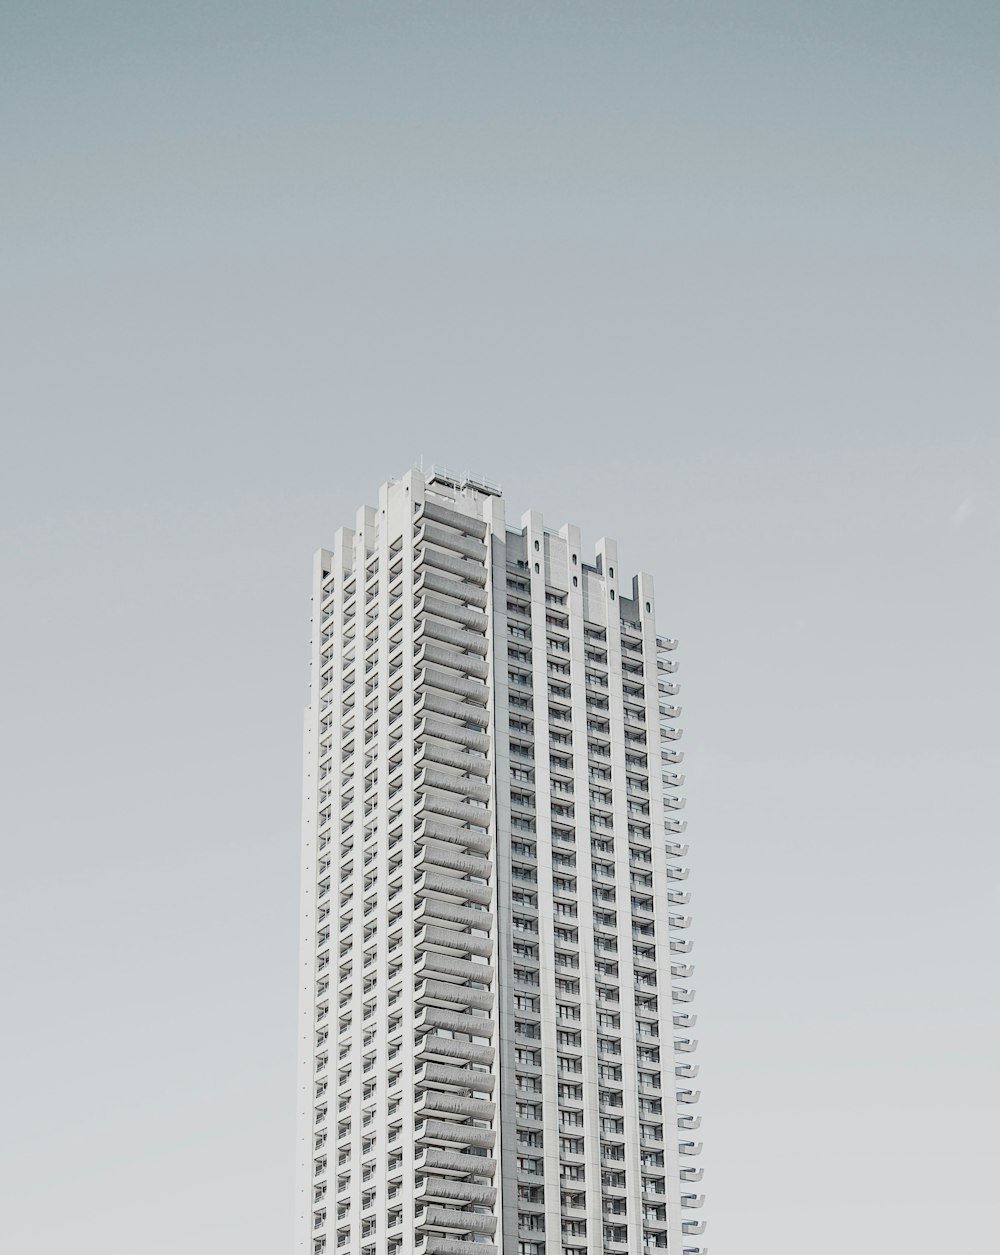 edifício alto de concreto branco